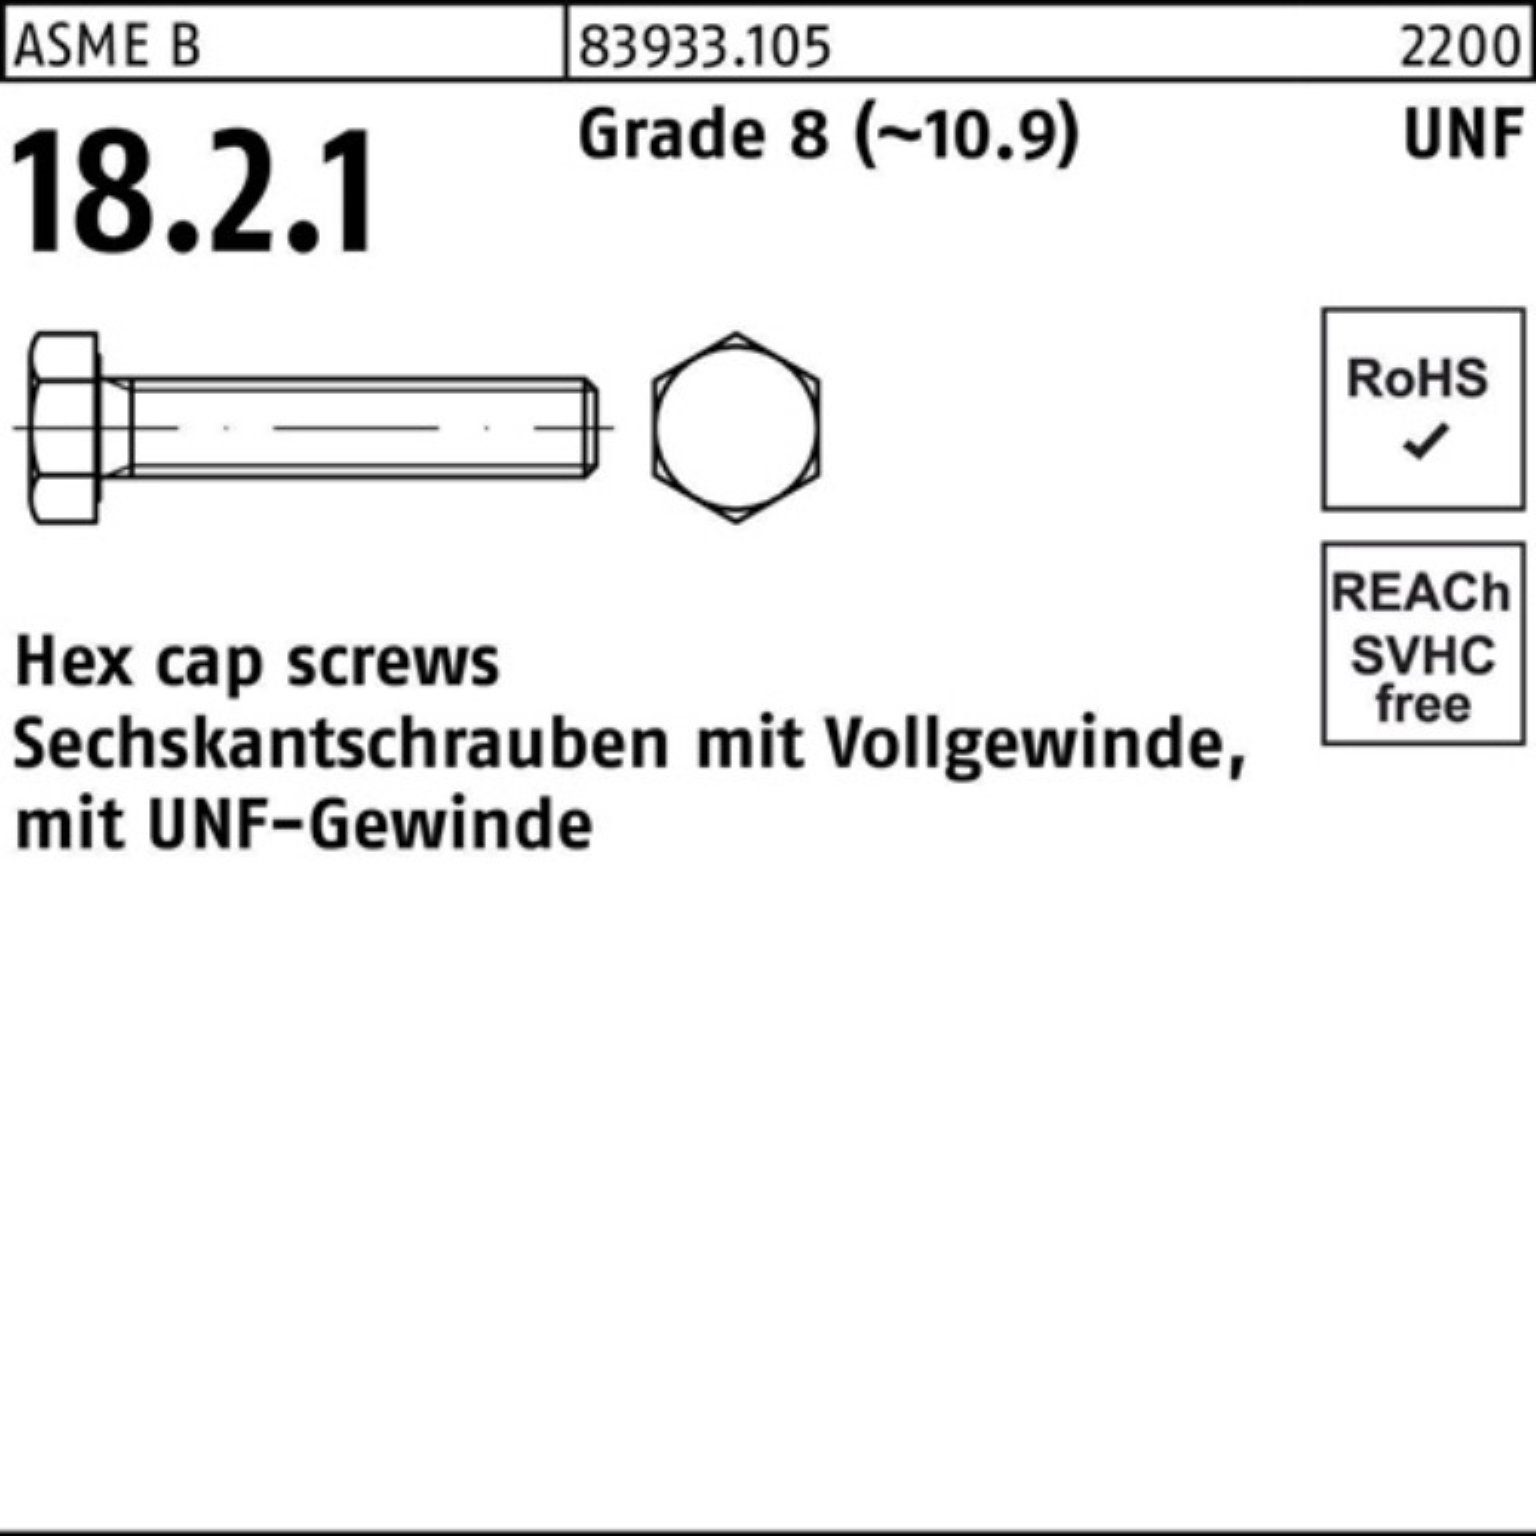 Reyher Sechskantschraube 8 3/8x VG 83933 UNF-Gewinde Sechskantschraube Grade R Pack 1/2 100er